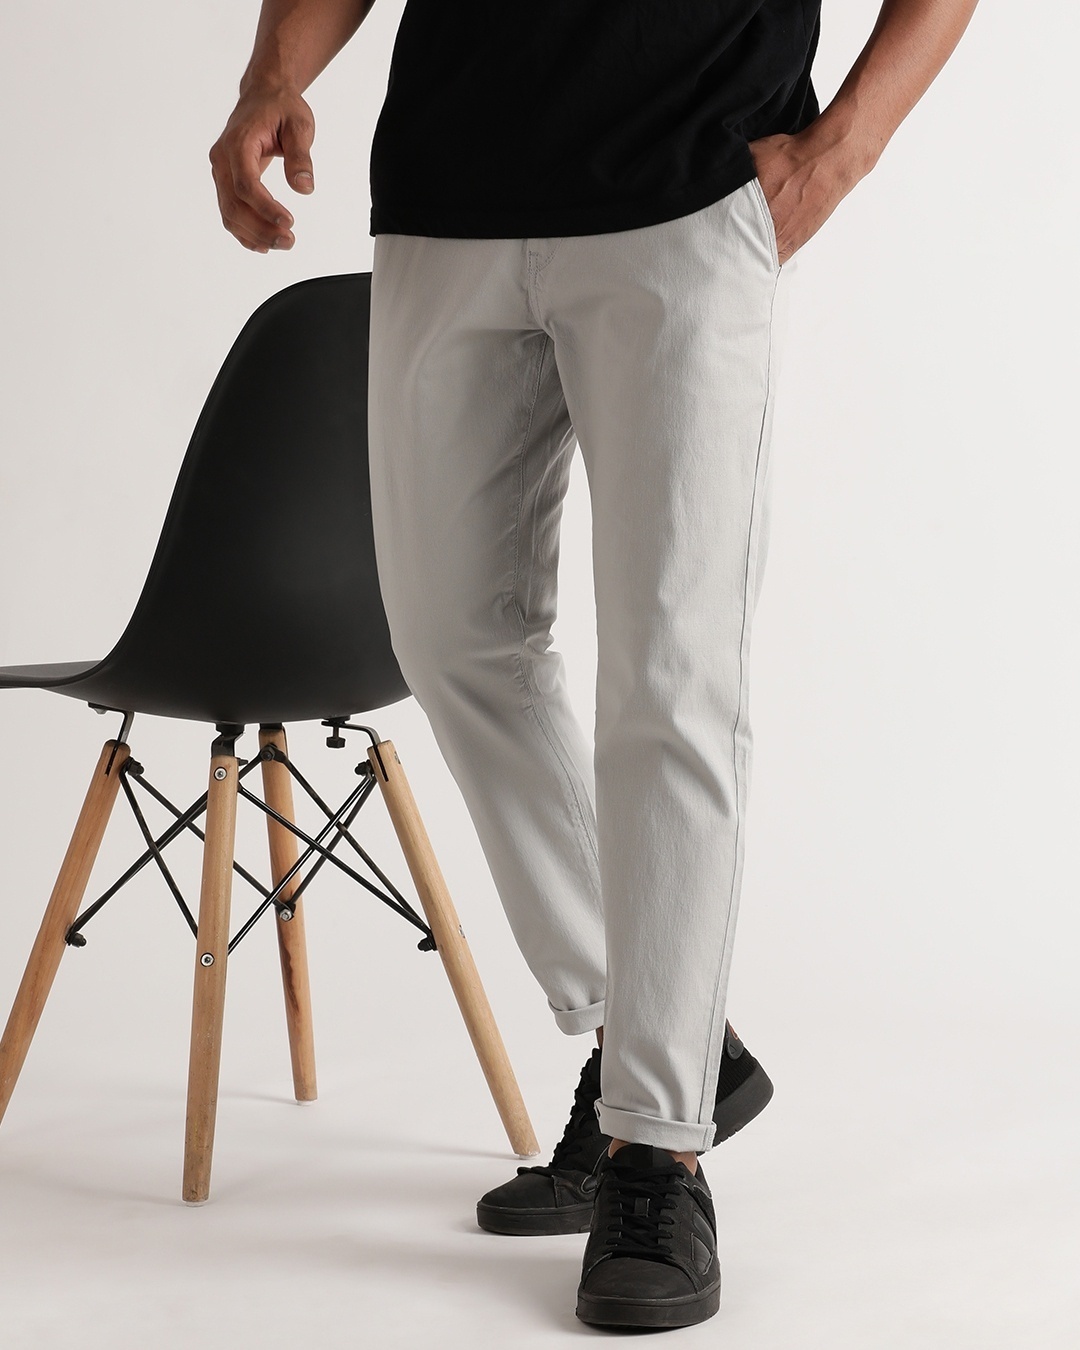 Buy Men Black Slim Fit Trouser Online in India - Monte Carlo